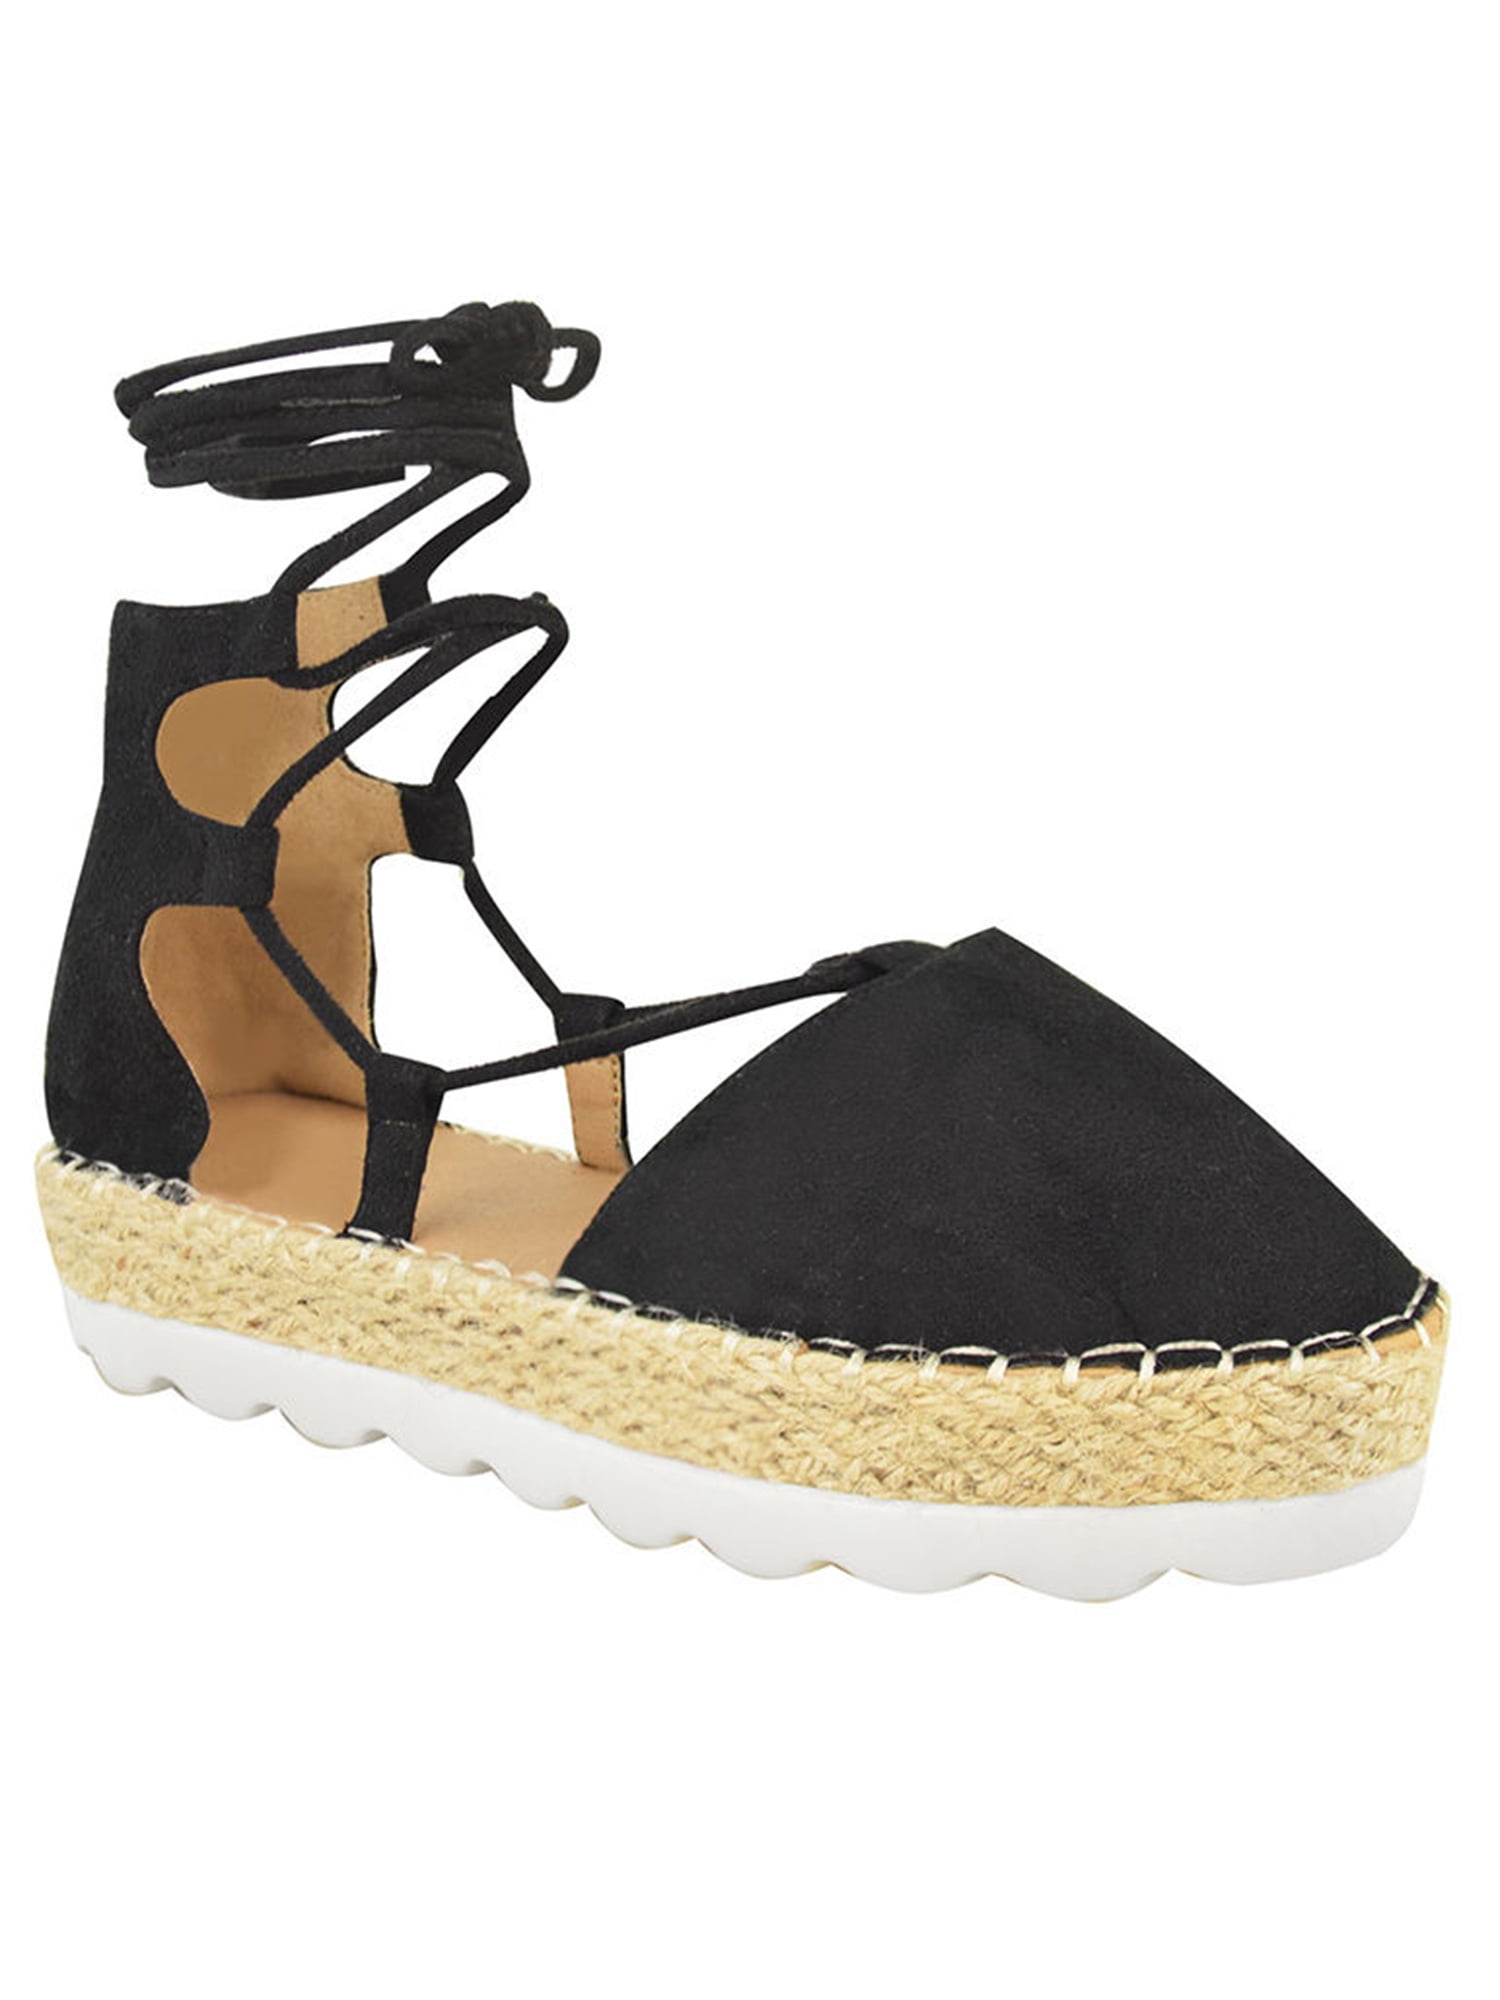 New Womens Flat Shoes Espadrilles Summer Holidays Beach Sandal Ladies Black